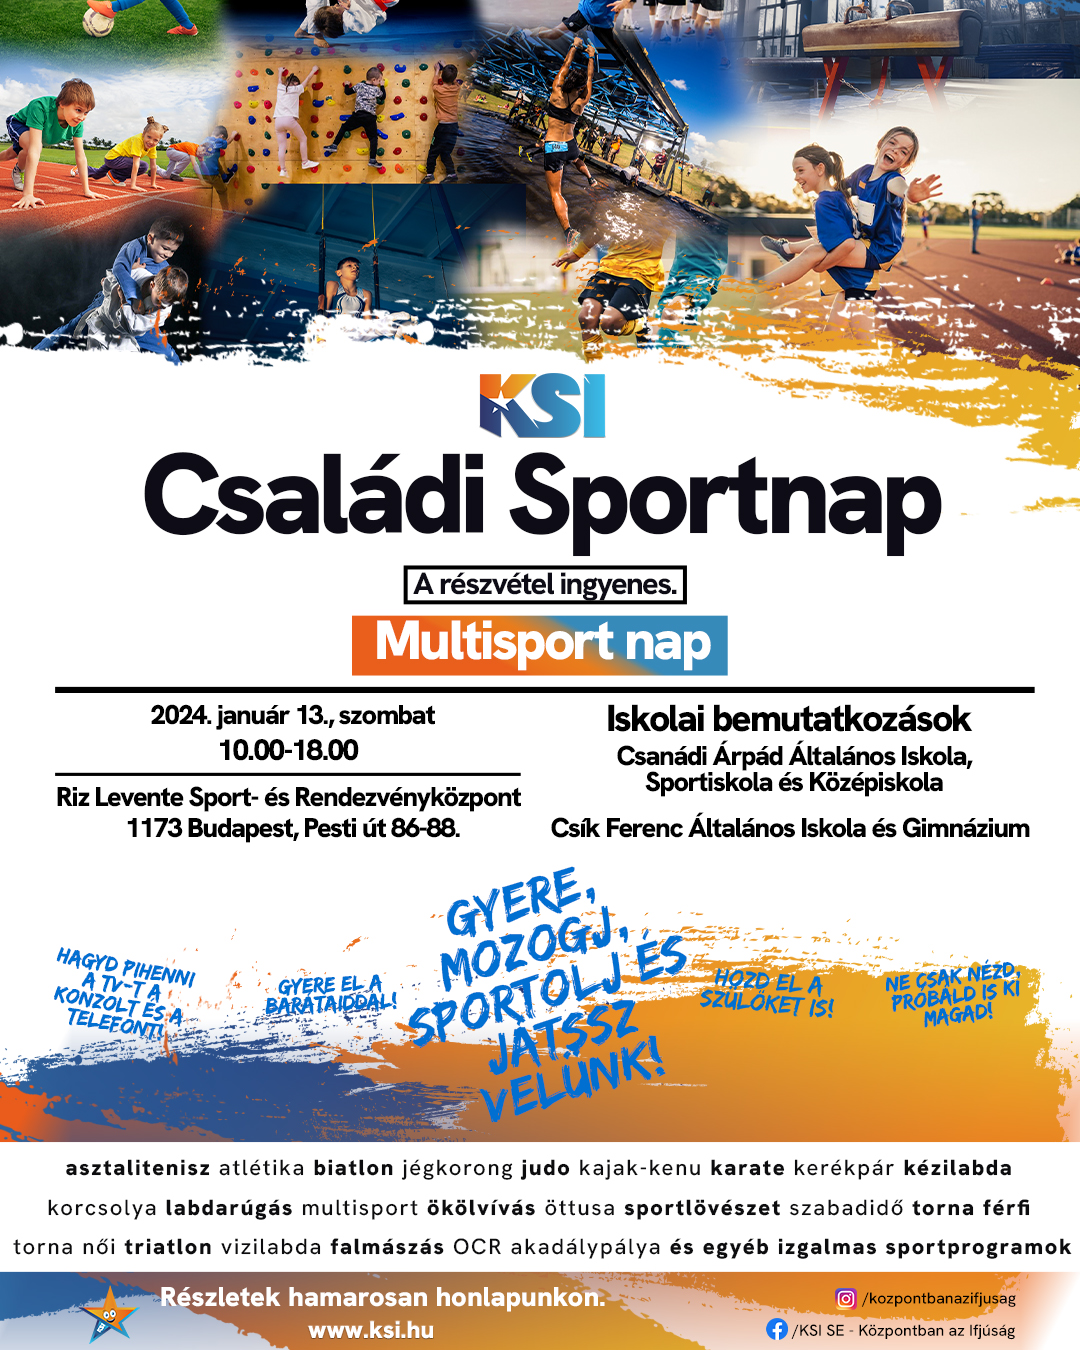 KSI Családi Sportnap